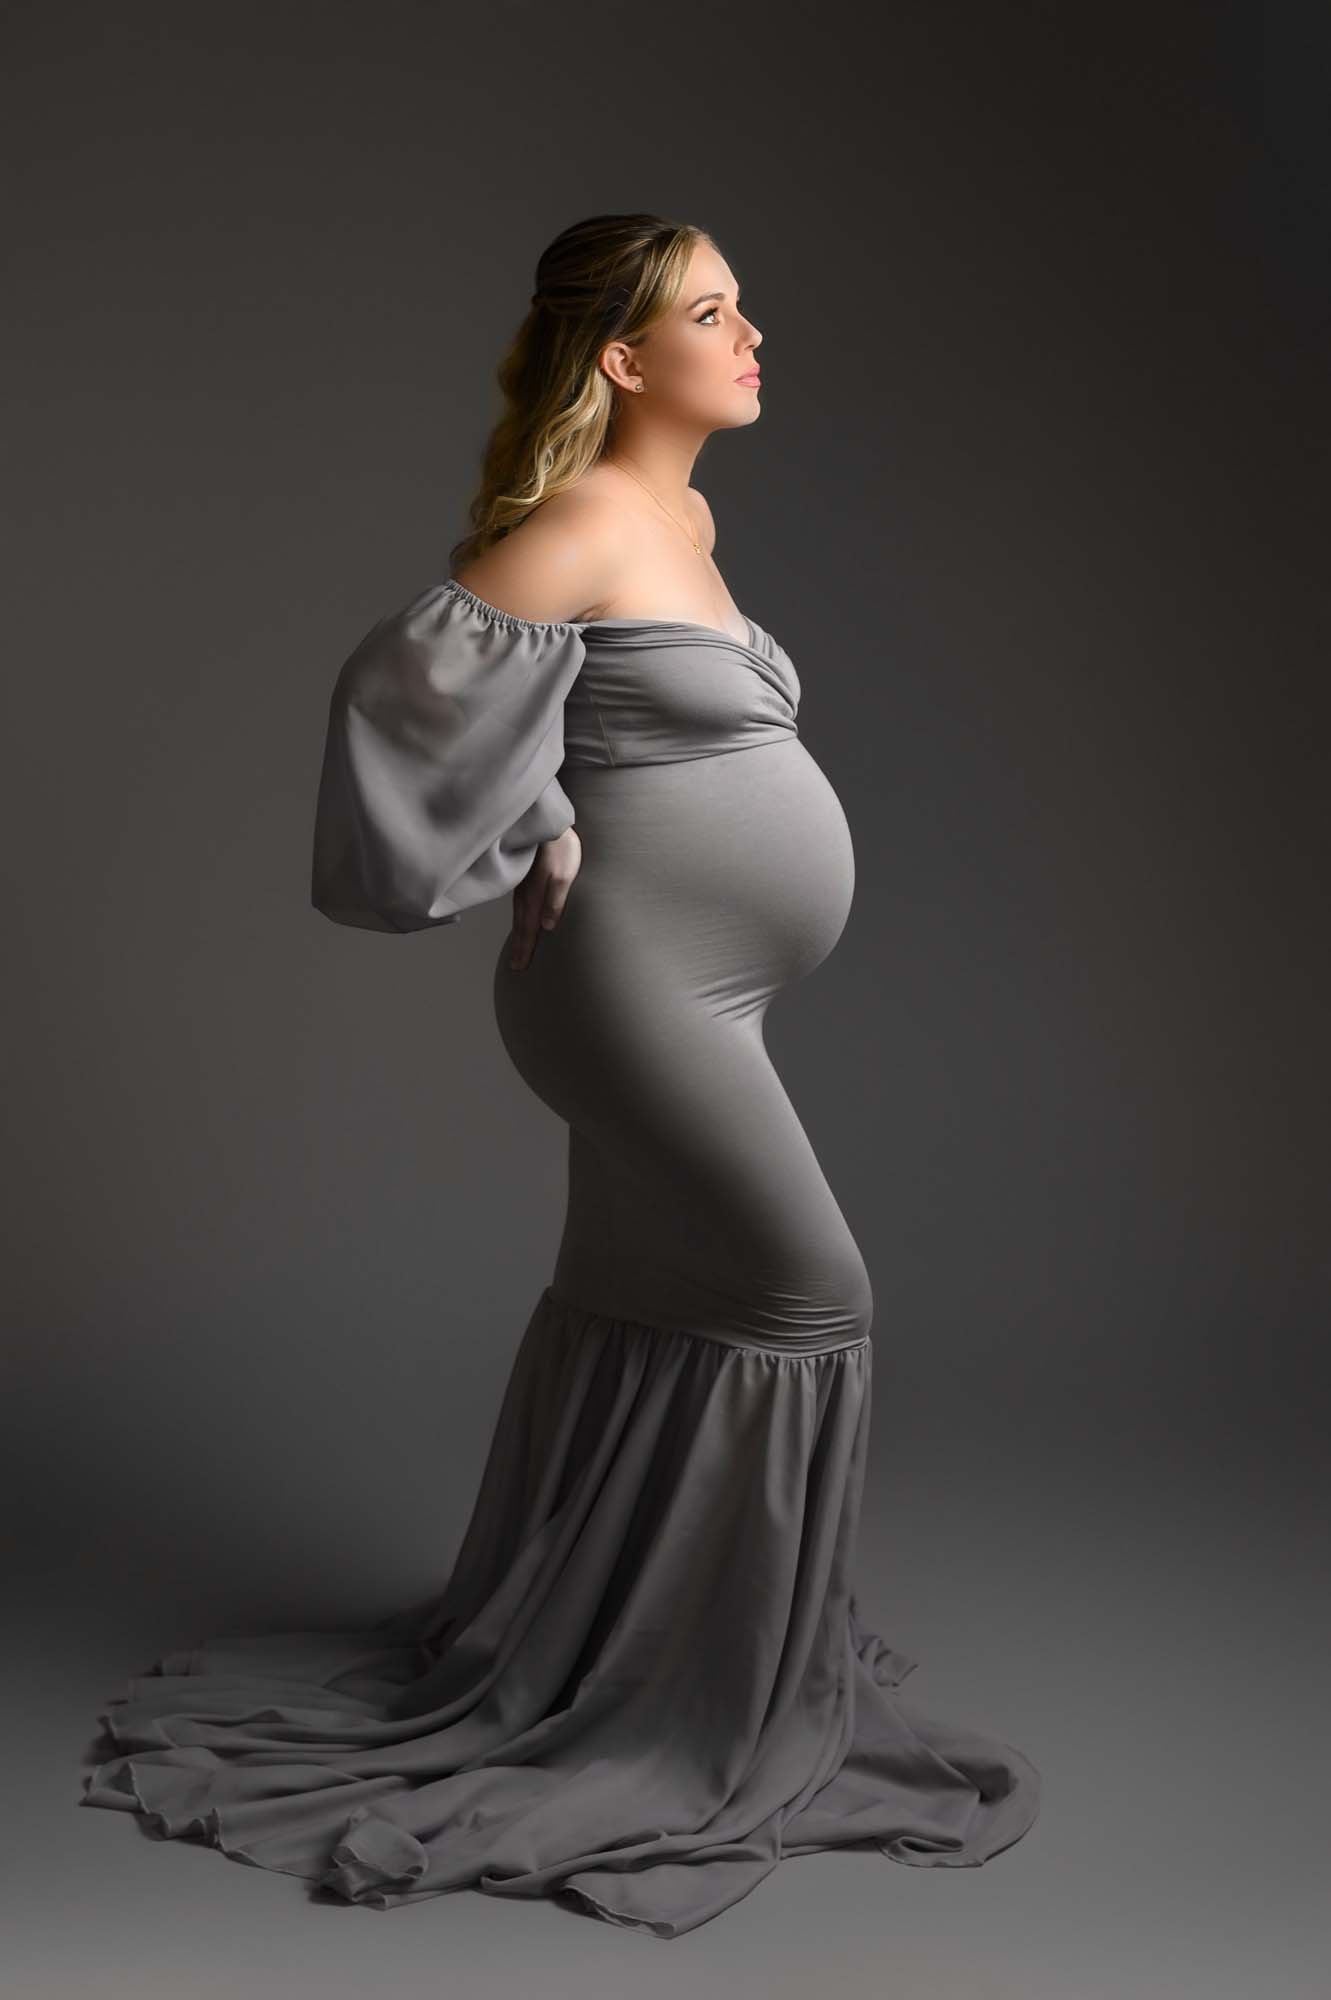 Maternity-Photography-Session-Northlake-Justin-Haslet-Classic-Black-White-Baby-boy-13